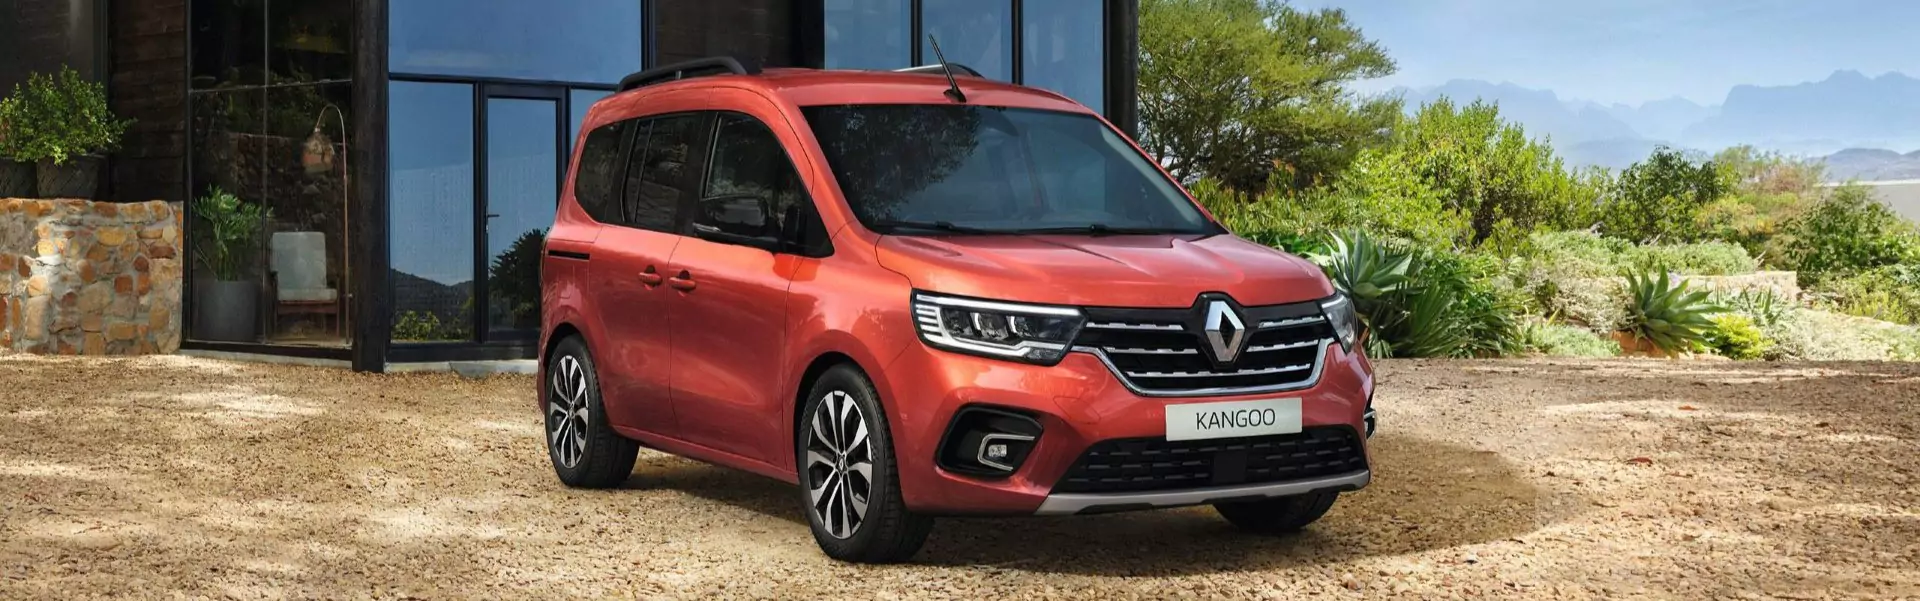 Renault Kangoo novo: gasolina, diesel ou elétrica